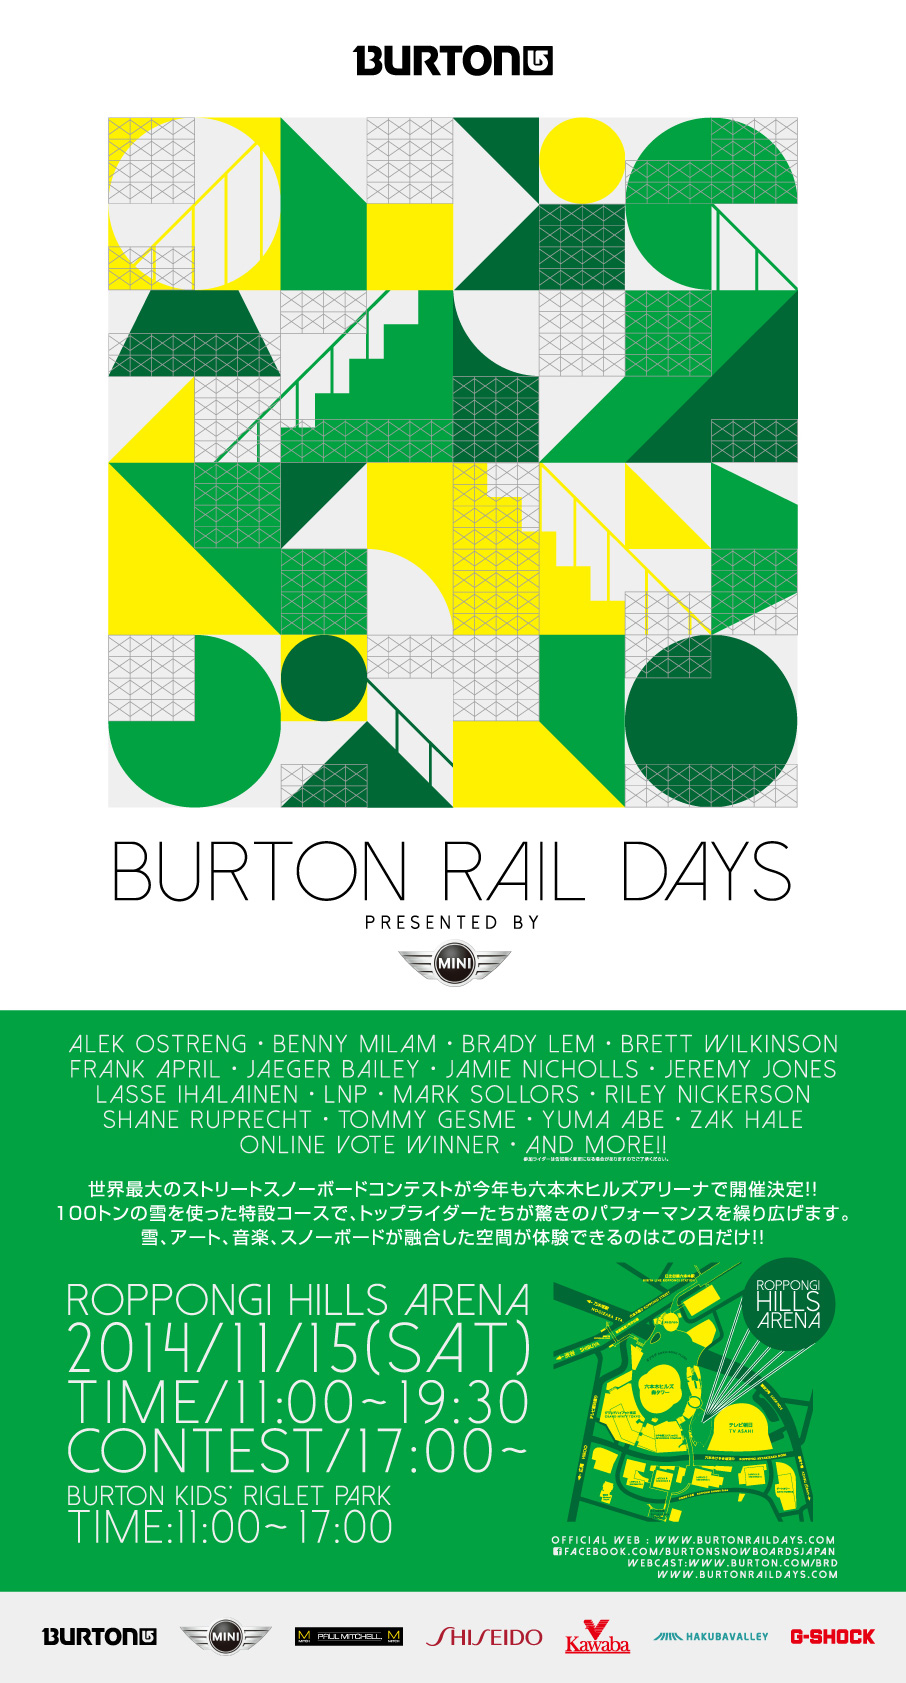 BURTON RAIL DAYS